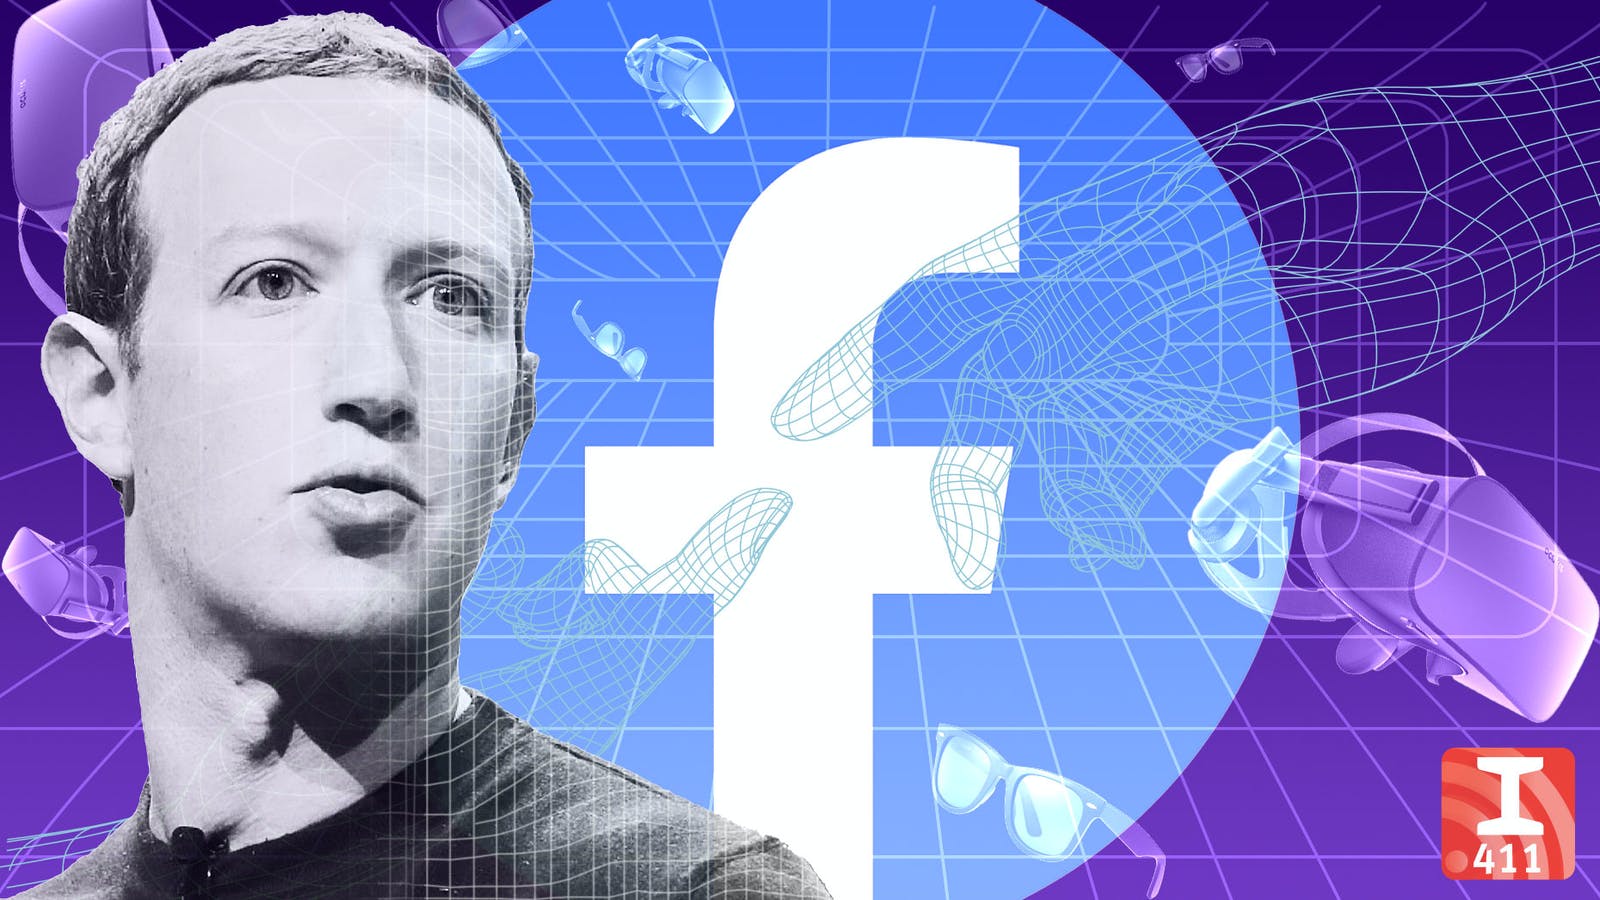  ZAKERBERG PRETI da će povući Facebook i Instagram iz Evrope ali ko još uopšte koristi Facebook?